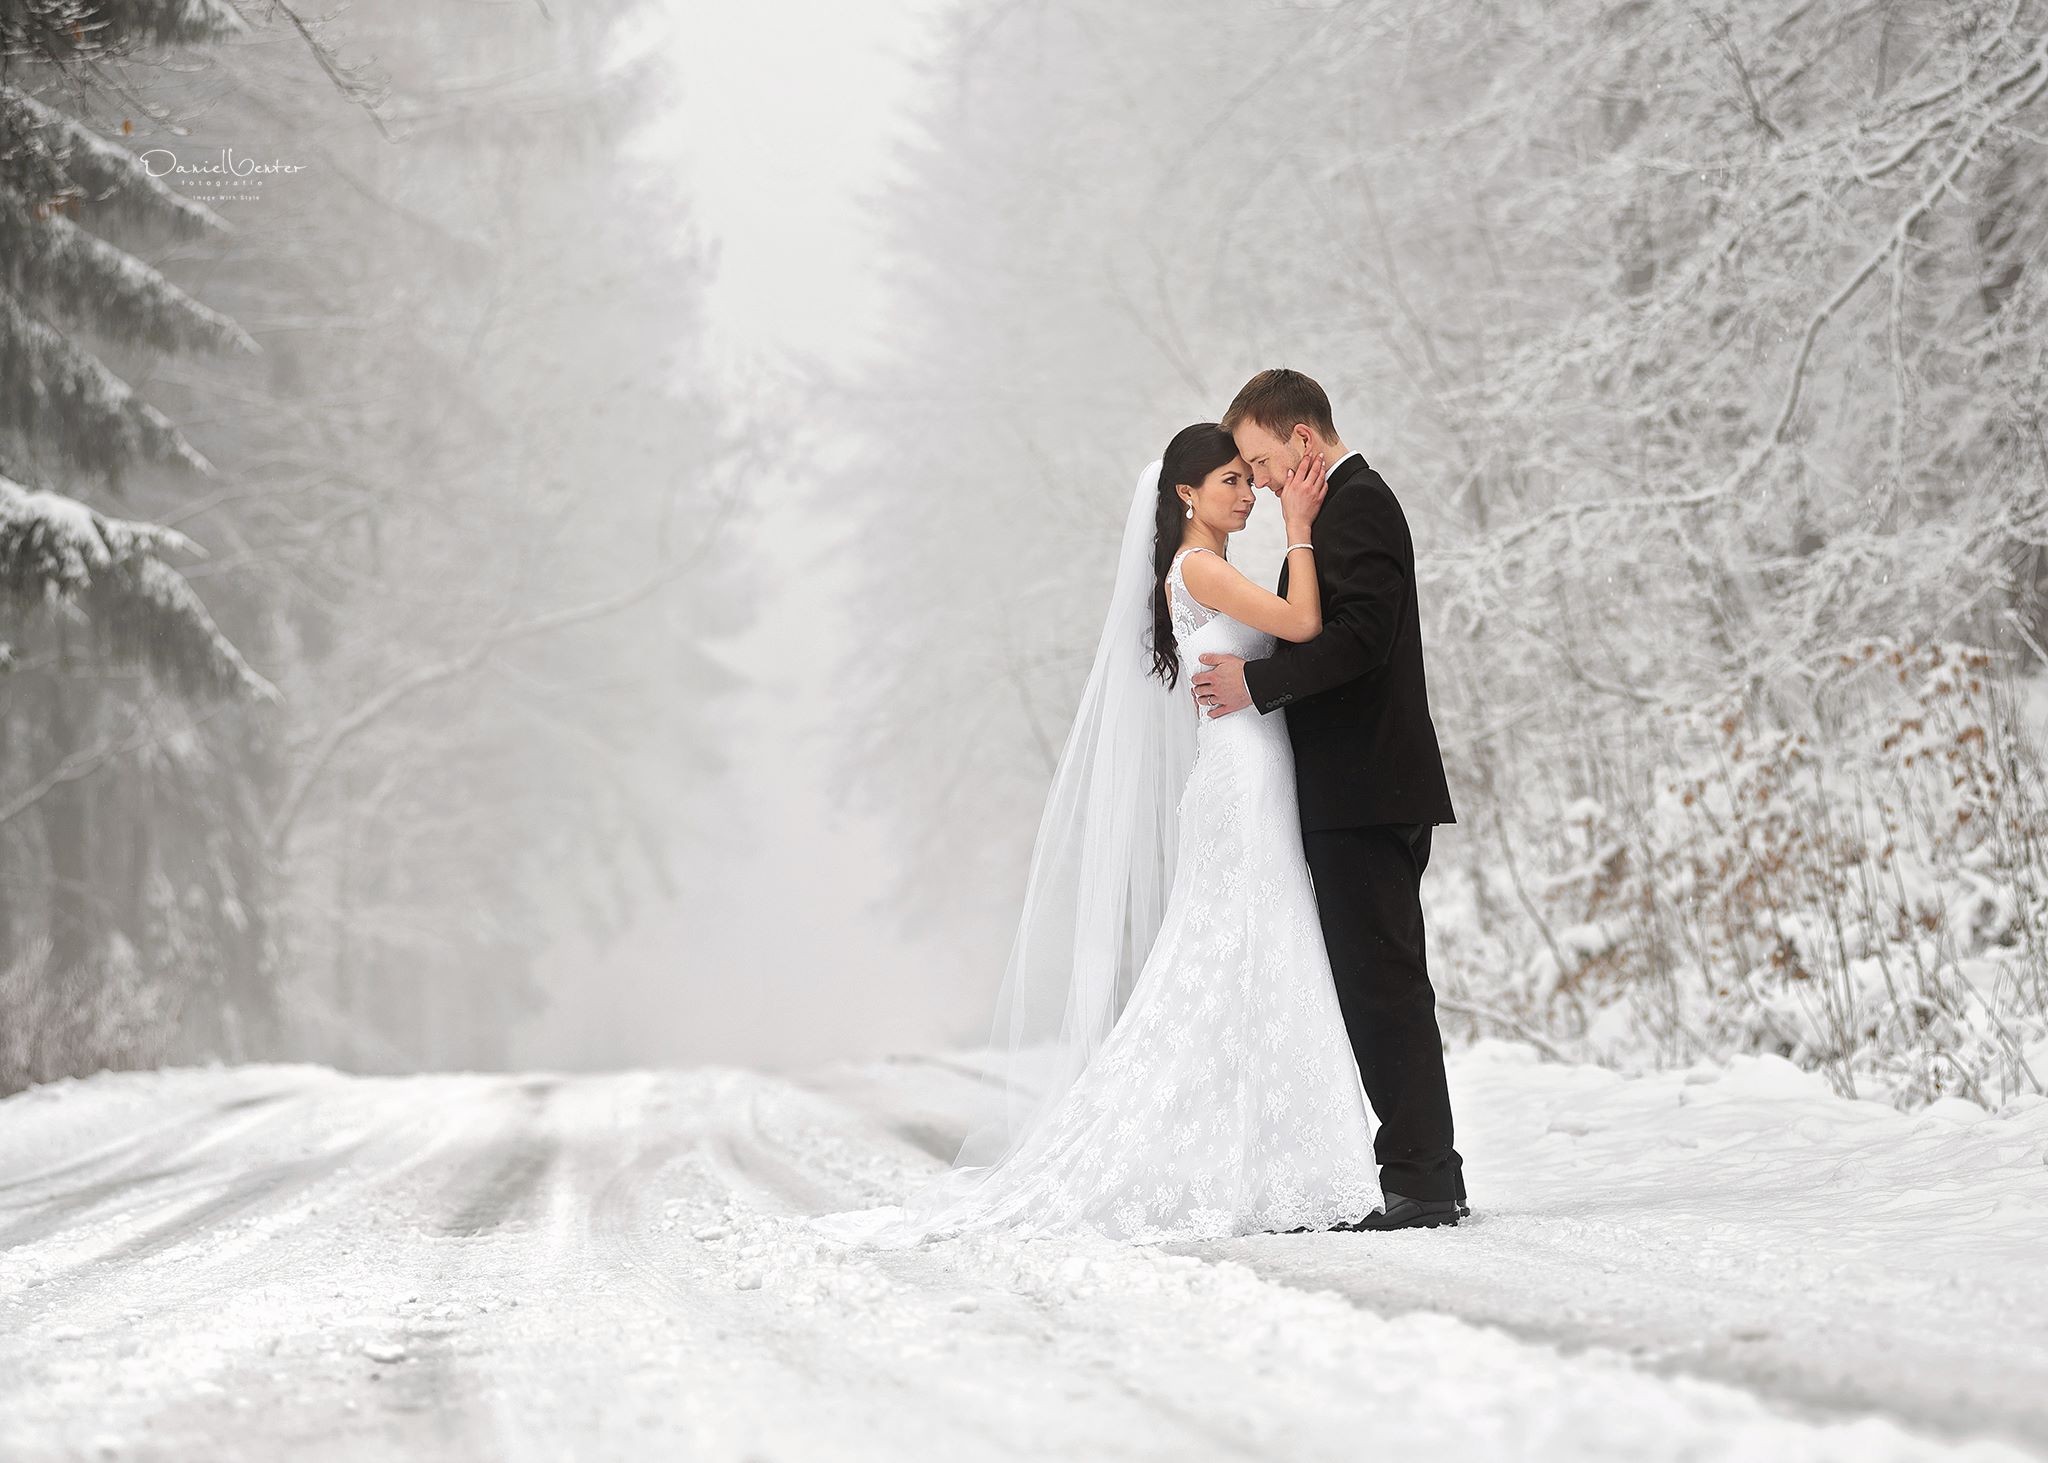 Weddings Wedding Dress Suits Marriage Winter Snow Road 2048x1463